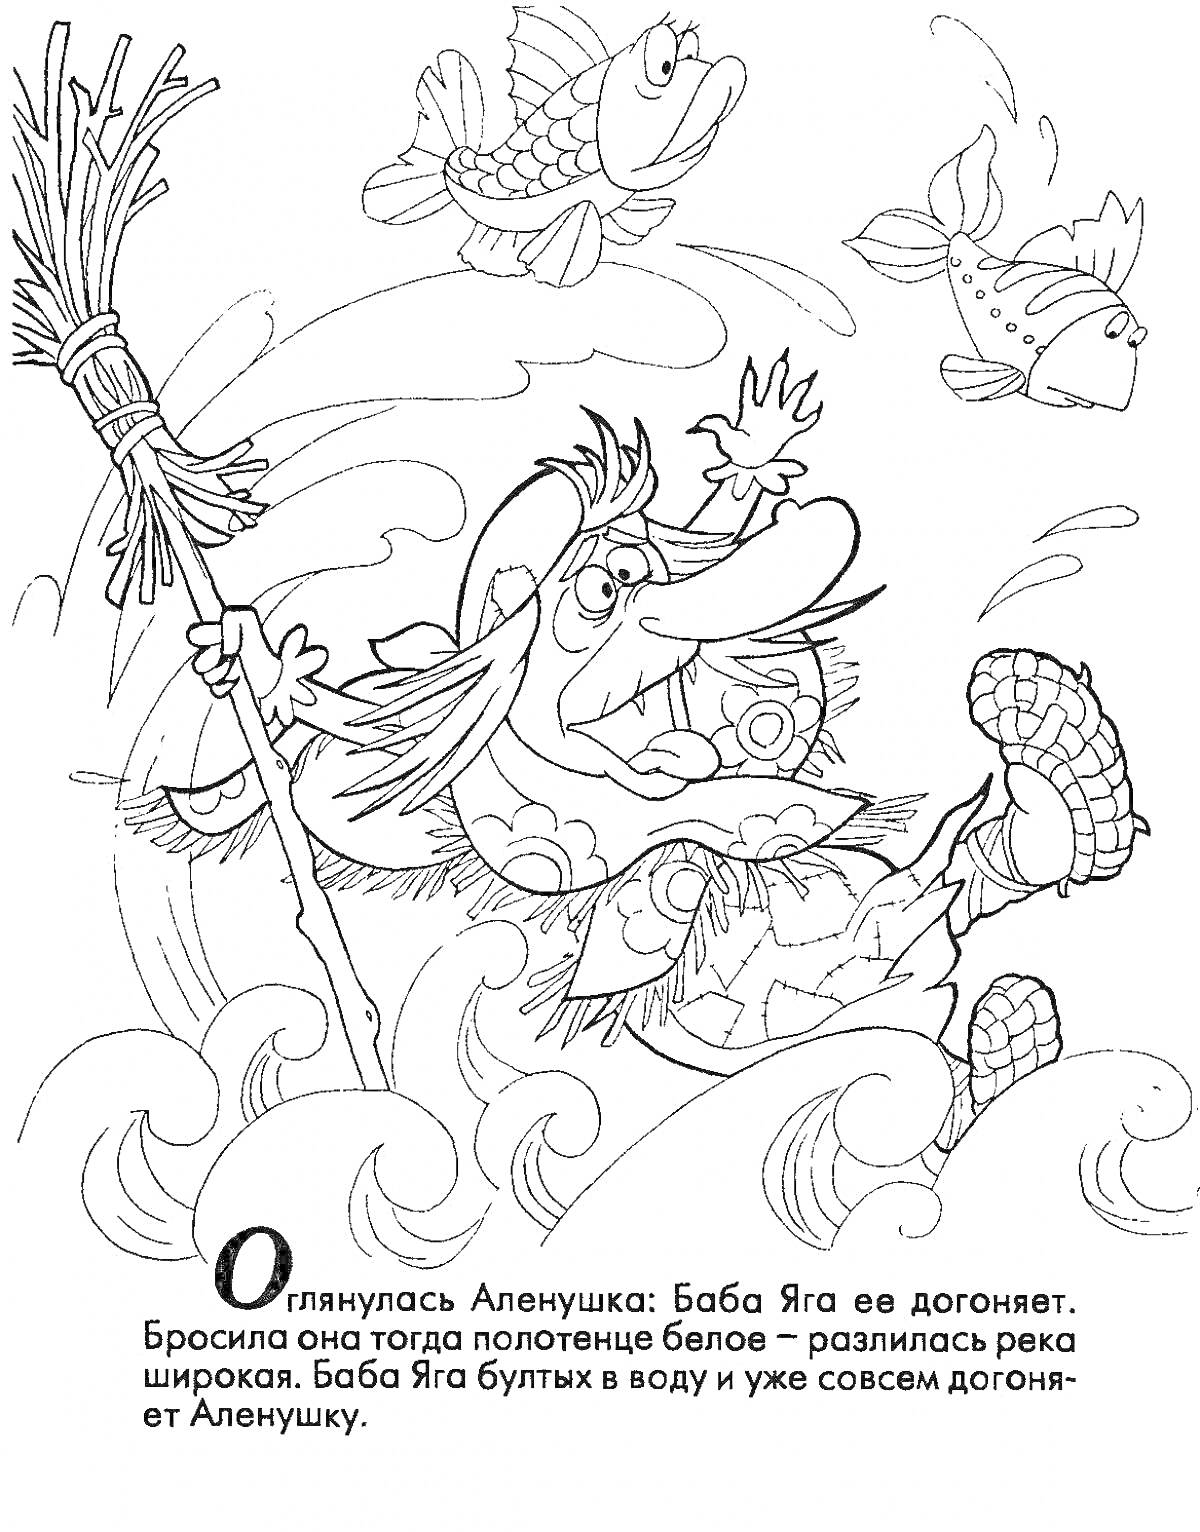 Раскраска Баба Яга на метле над рекой с тремя рыбами, текст выше и ниже изображения